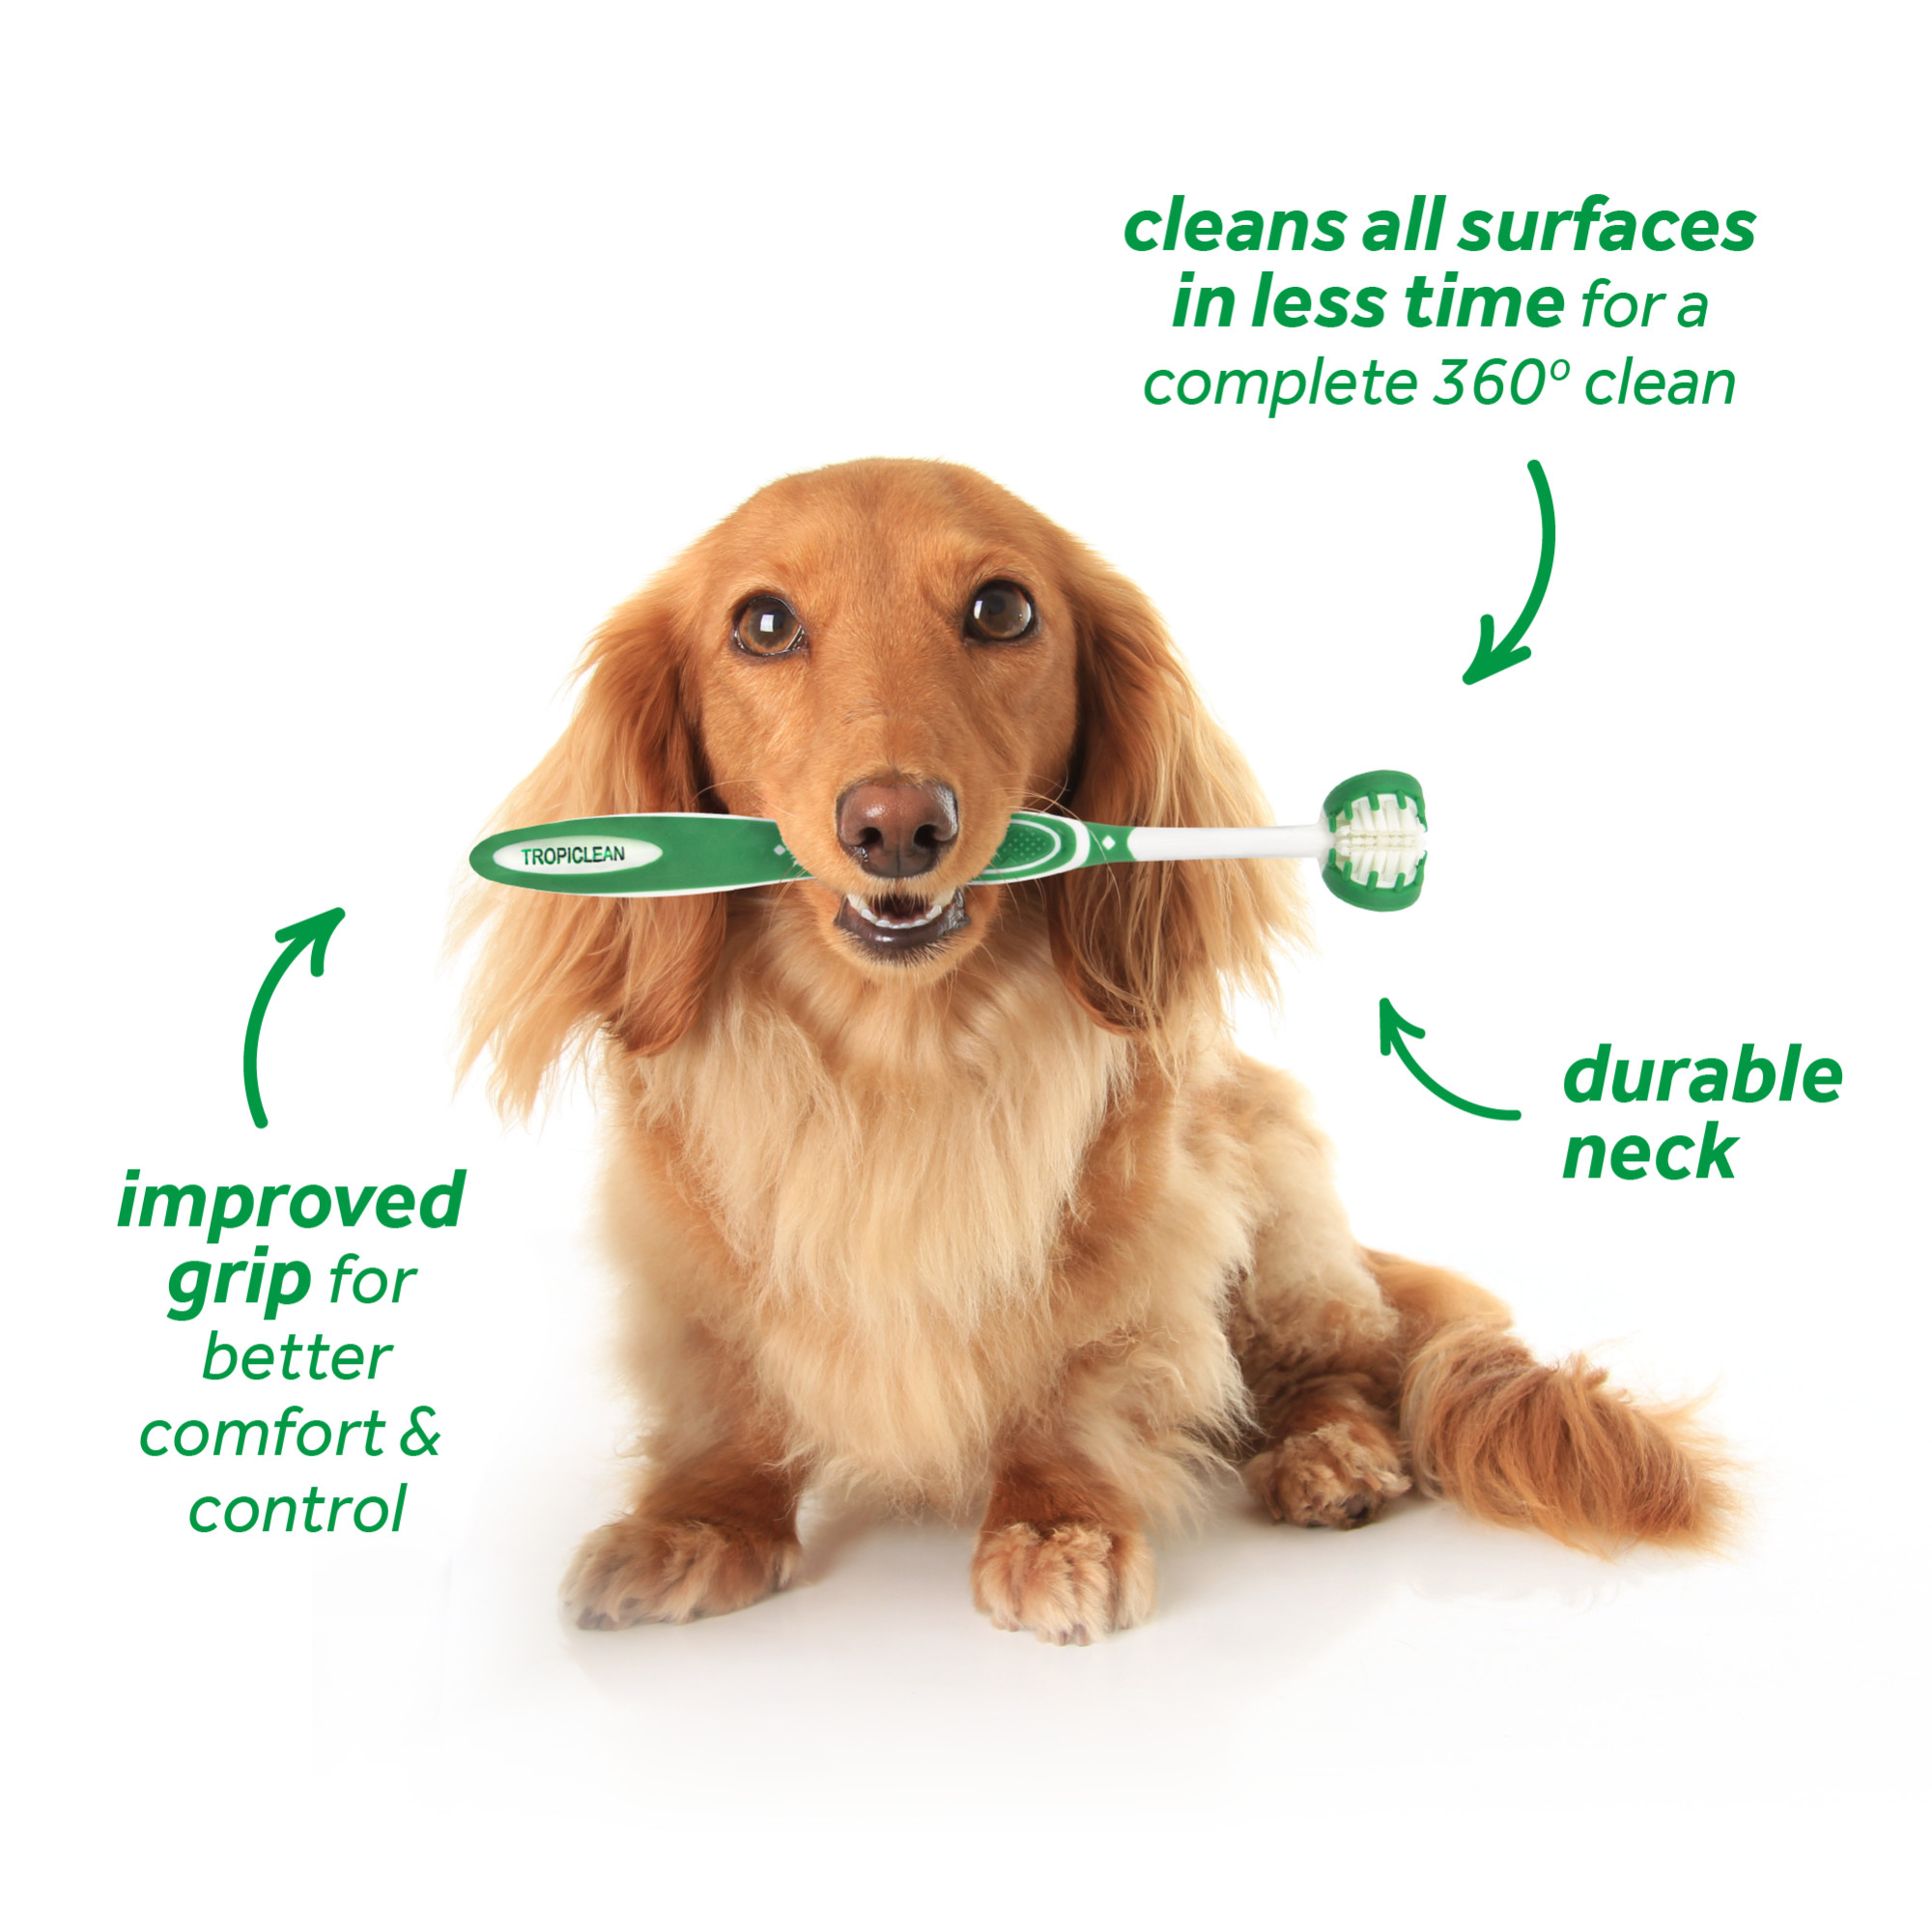 Tripleflex Toothbrush for Small/Medium Dogs